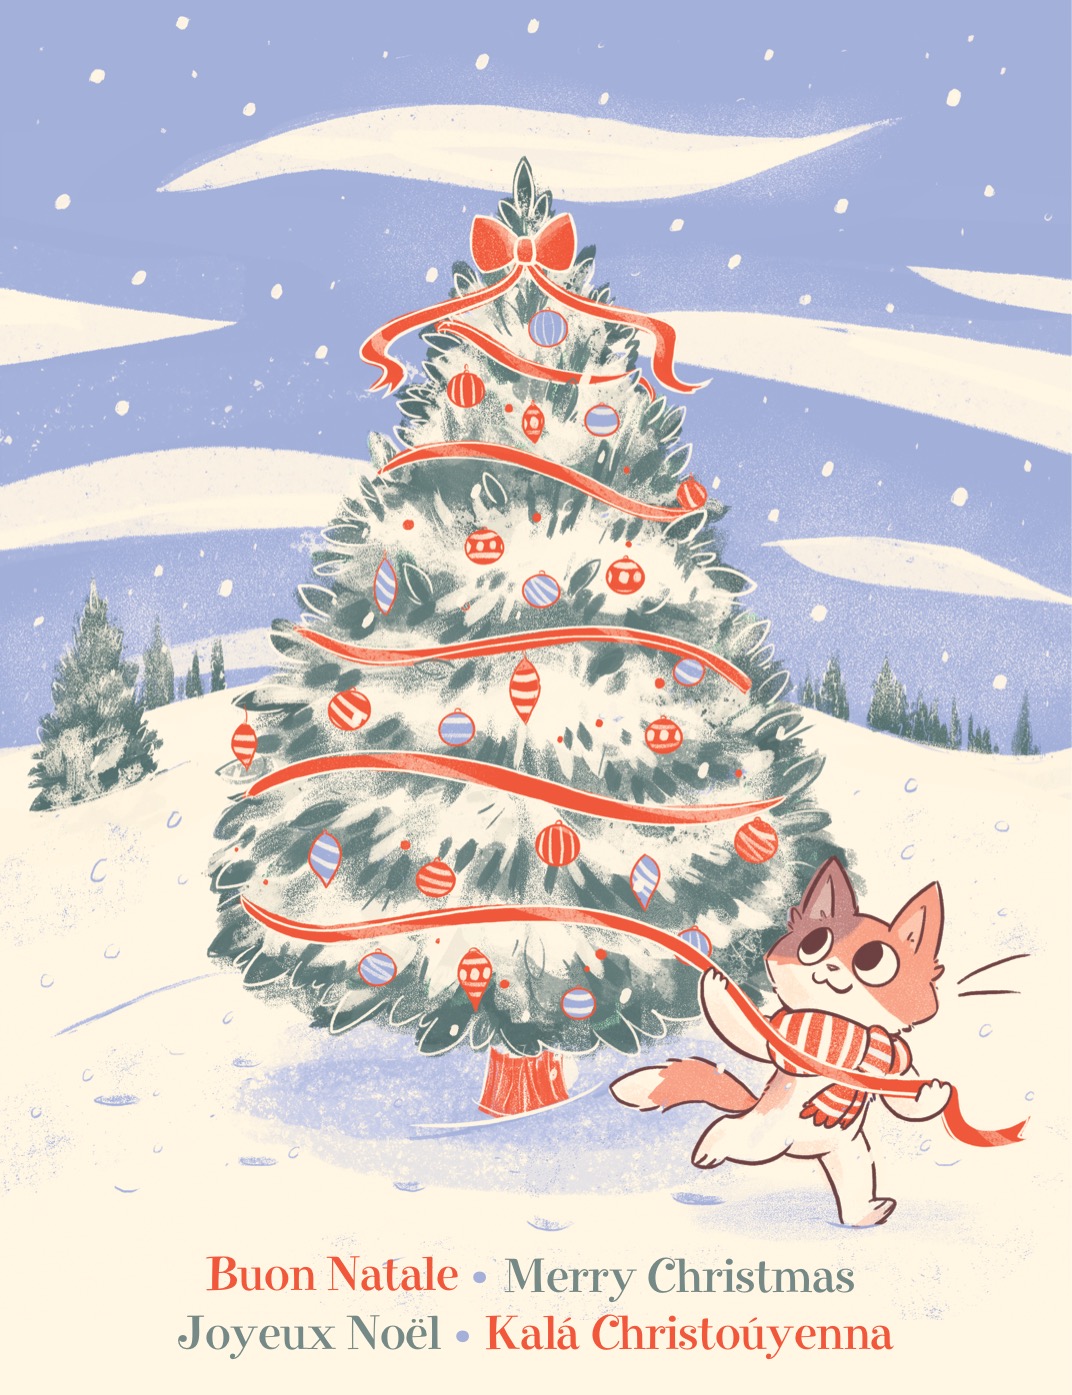 KeeKee Merry Christmas 2014